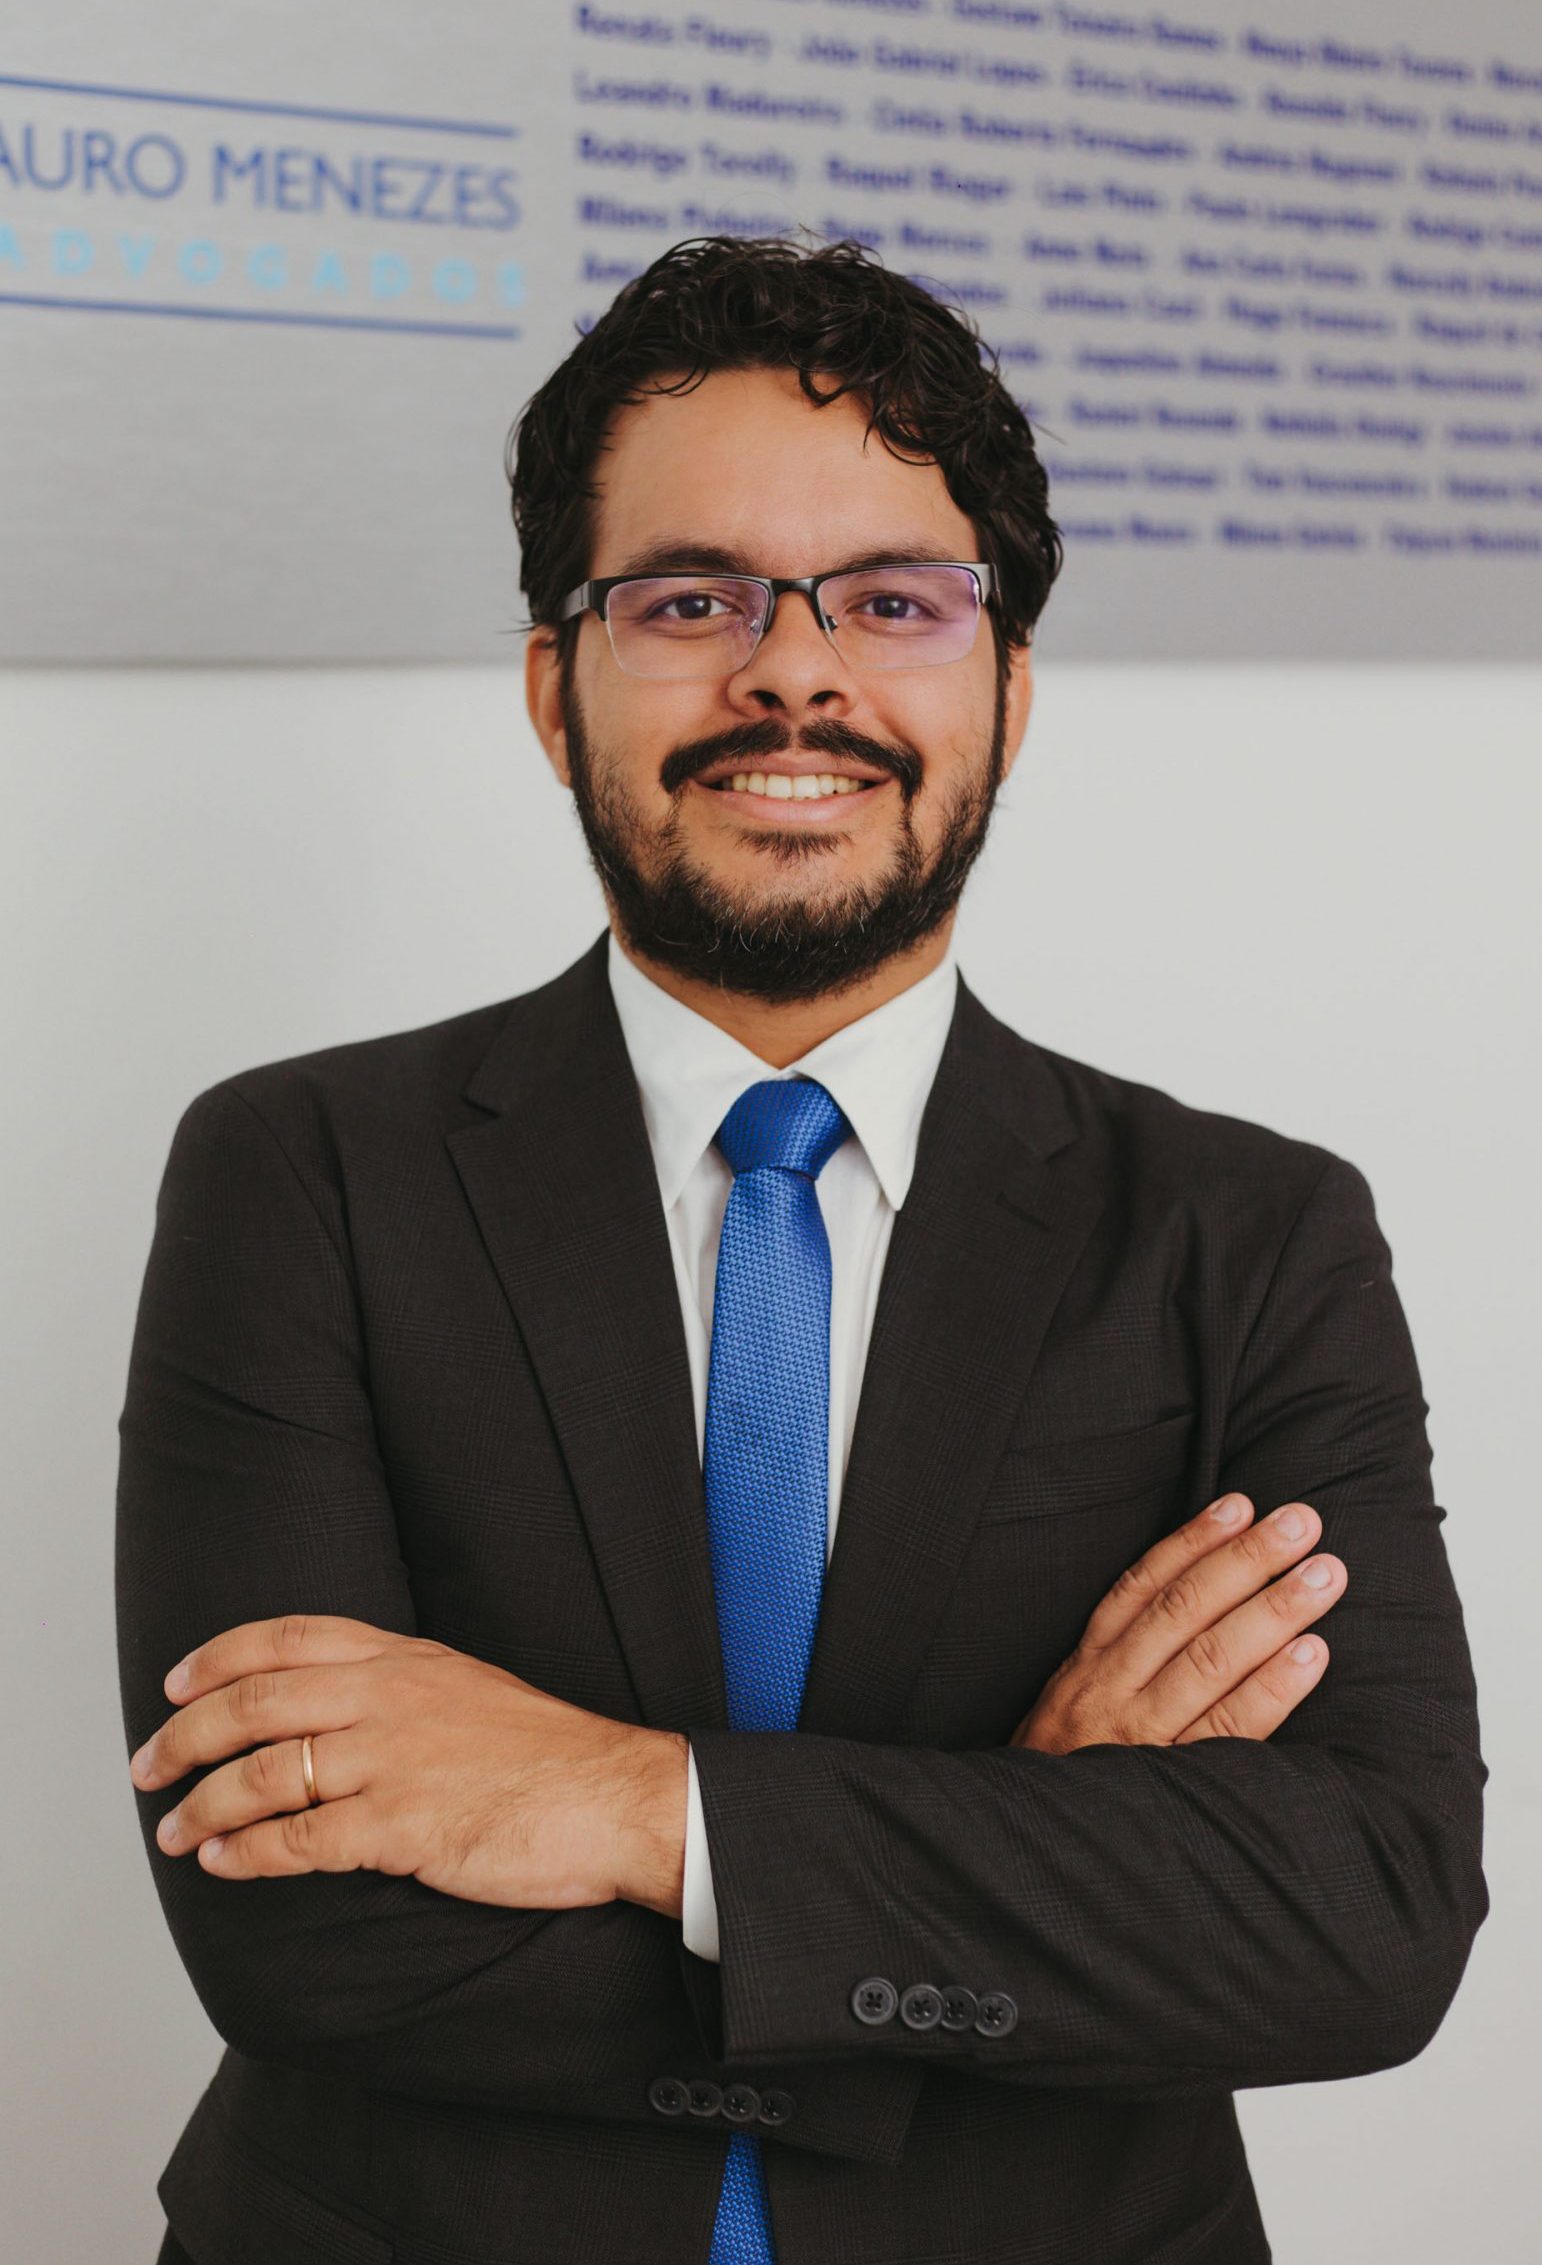 João Gabriel Pimentel Lopes